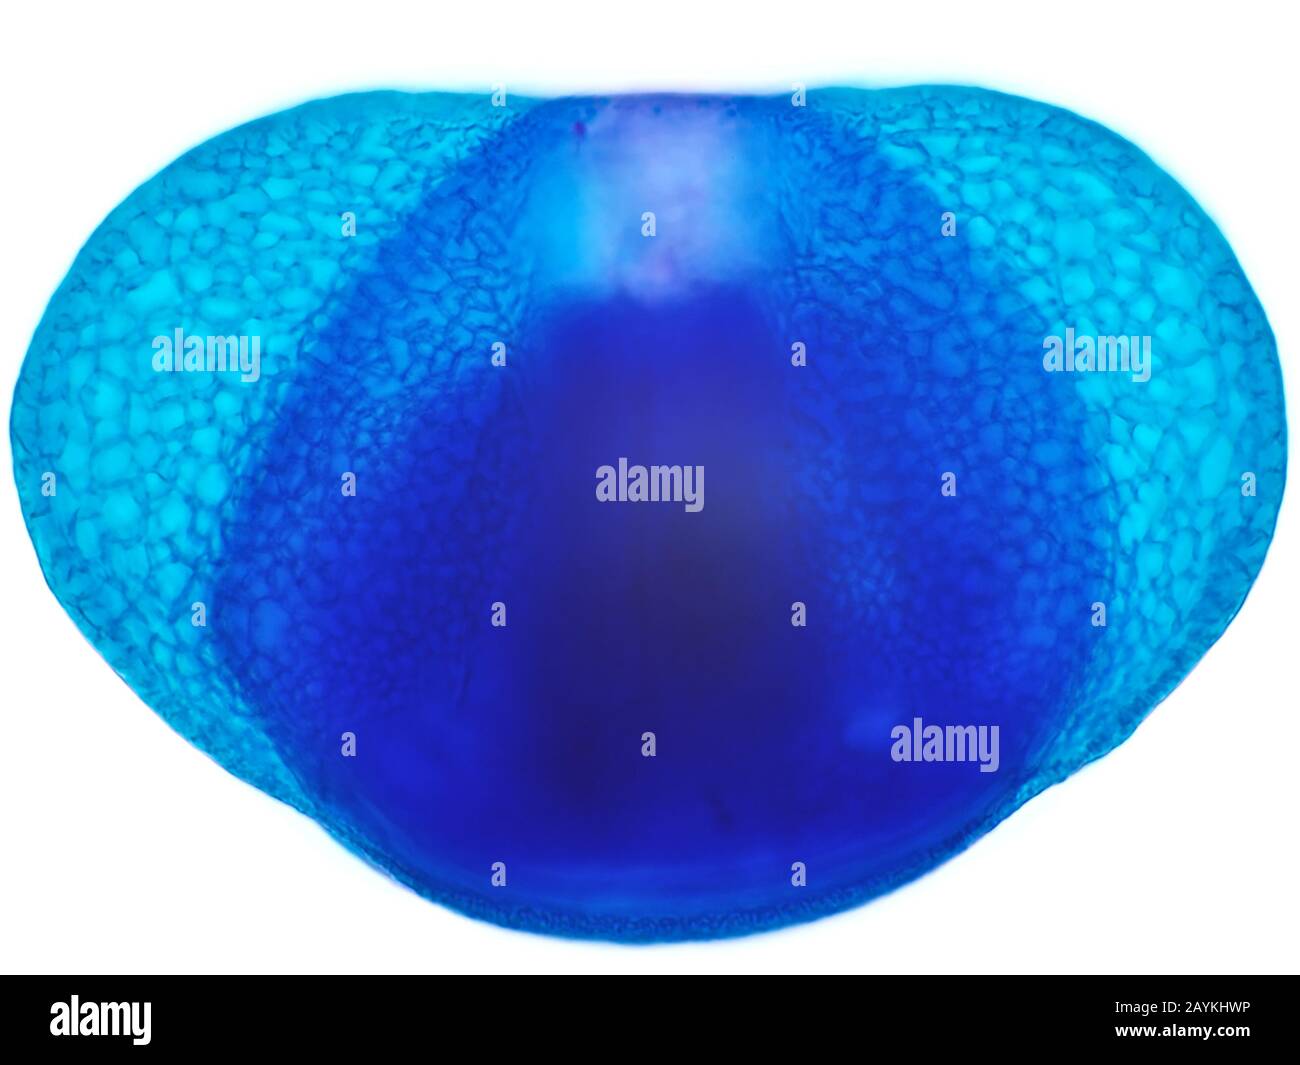 Grano de polen de pino fotografías e imágenes de alta resolución - Alamy